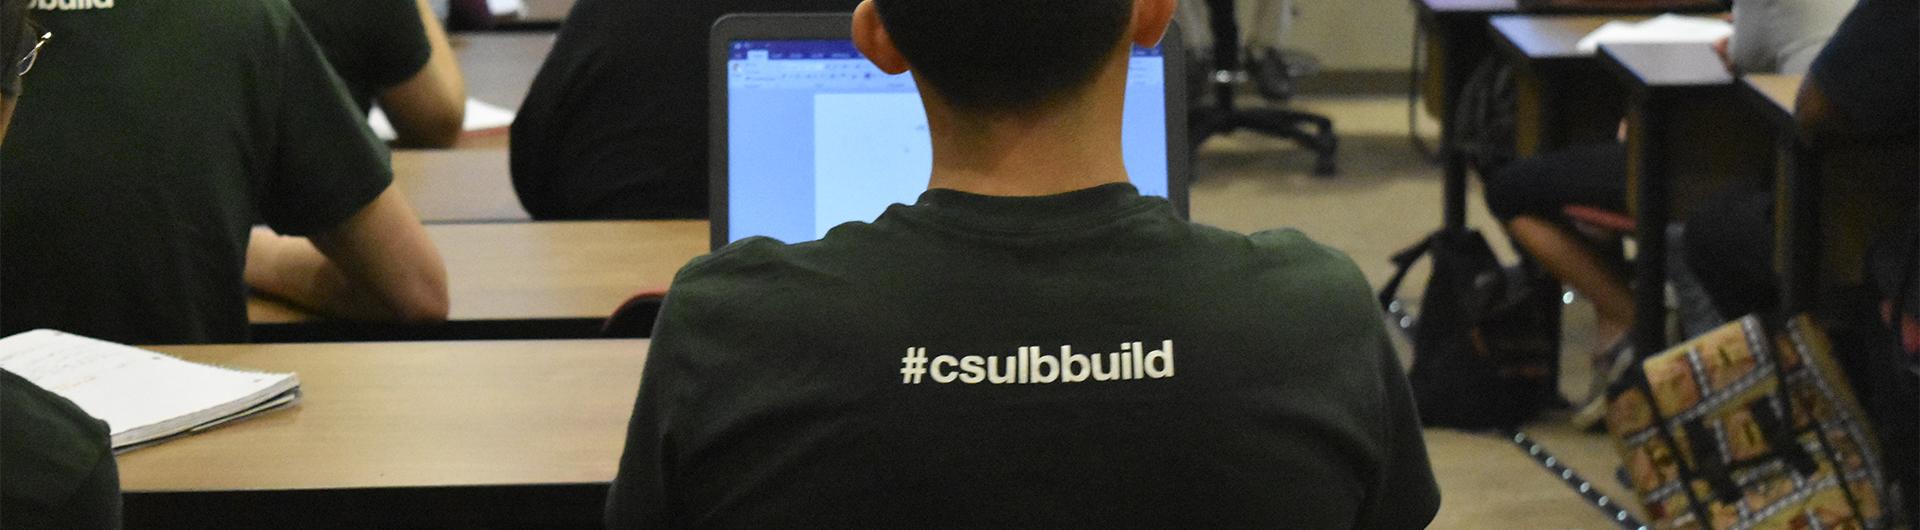 CSULB BUILD at USC 2017